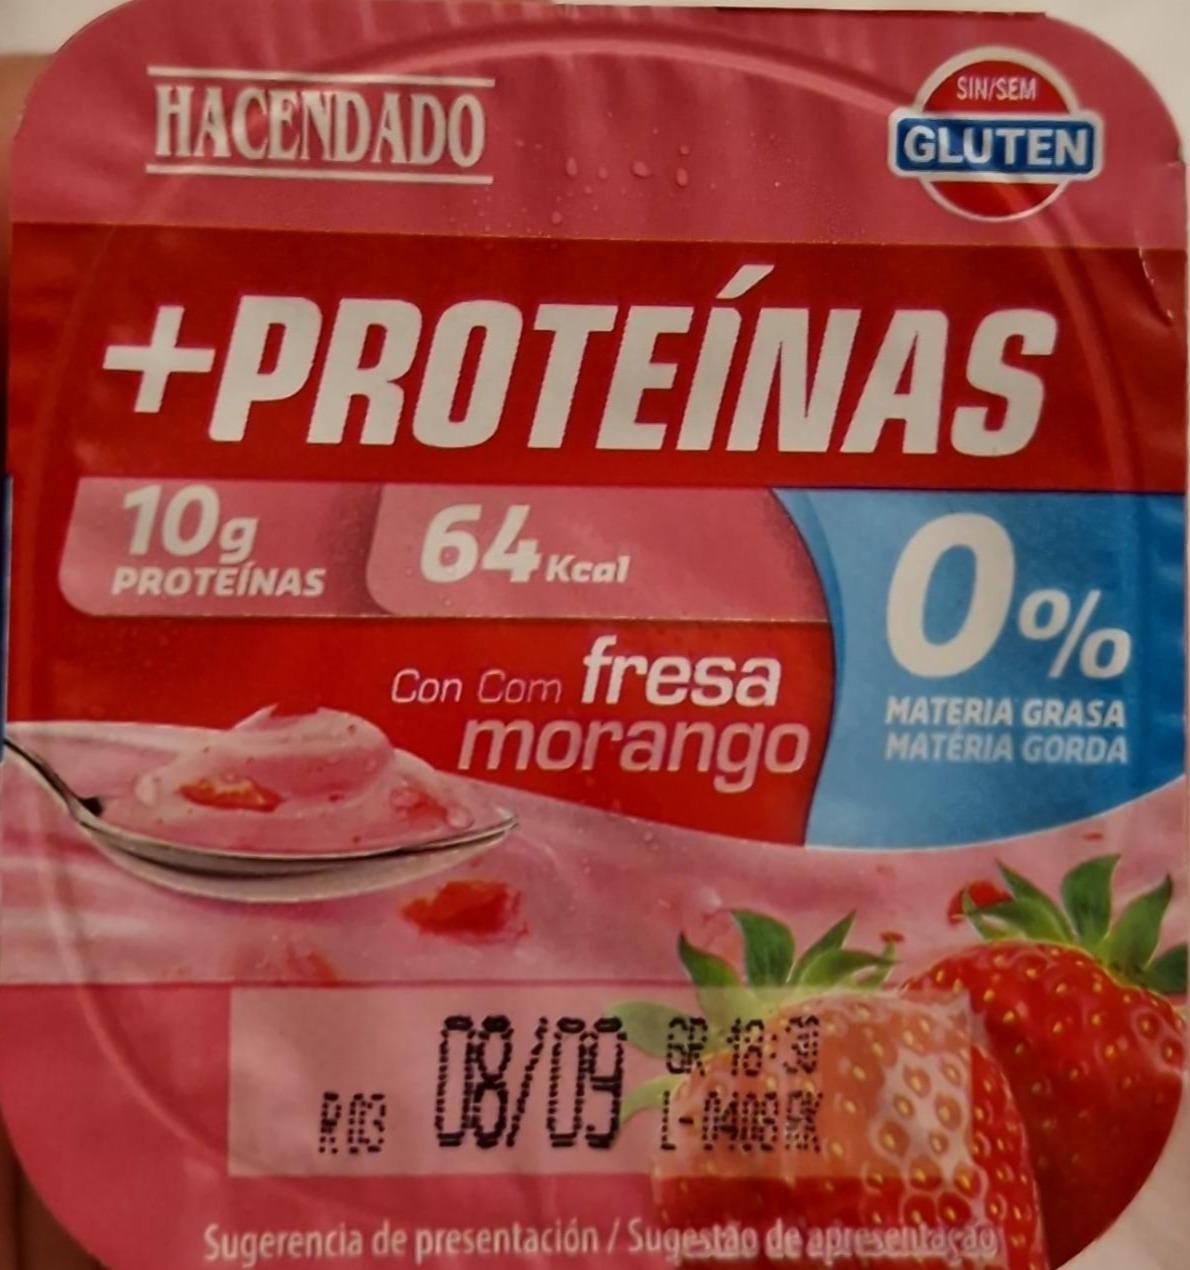 Фото - Йогурт+PROTEÍNAS з шматочками полуниці Hacendado